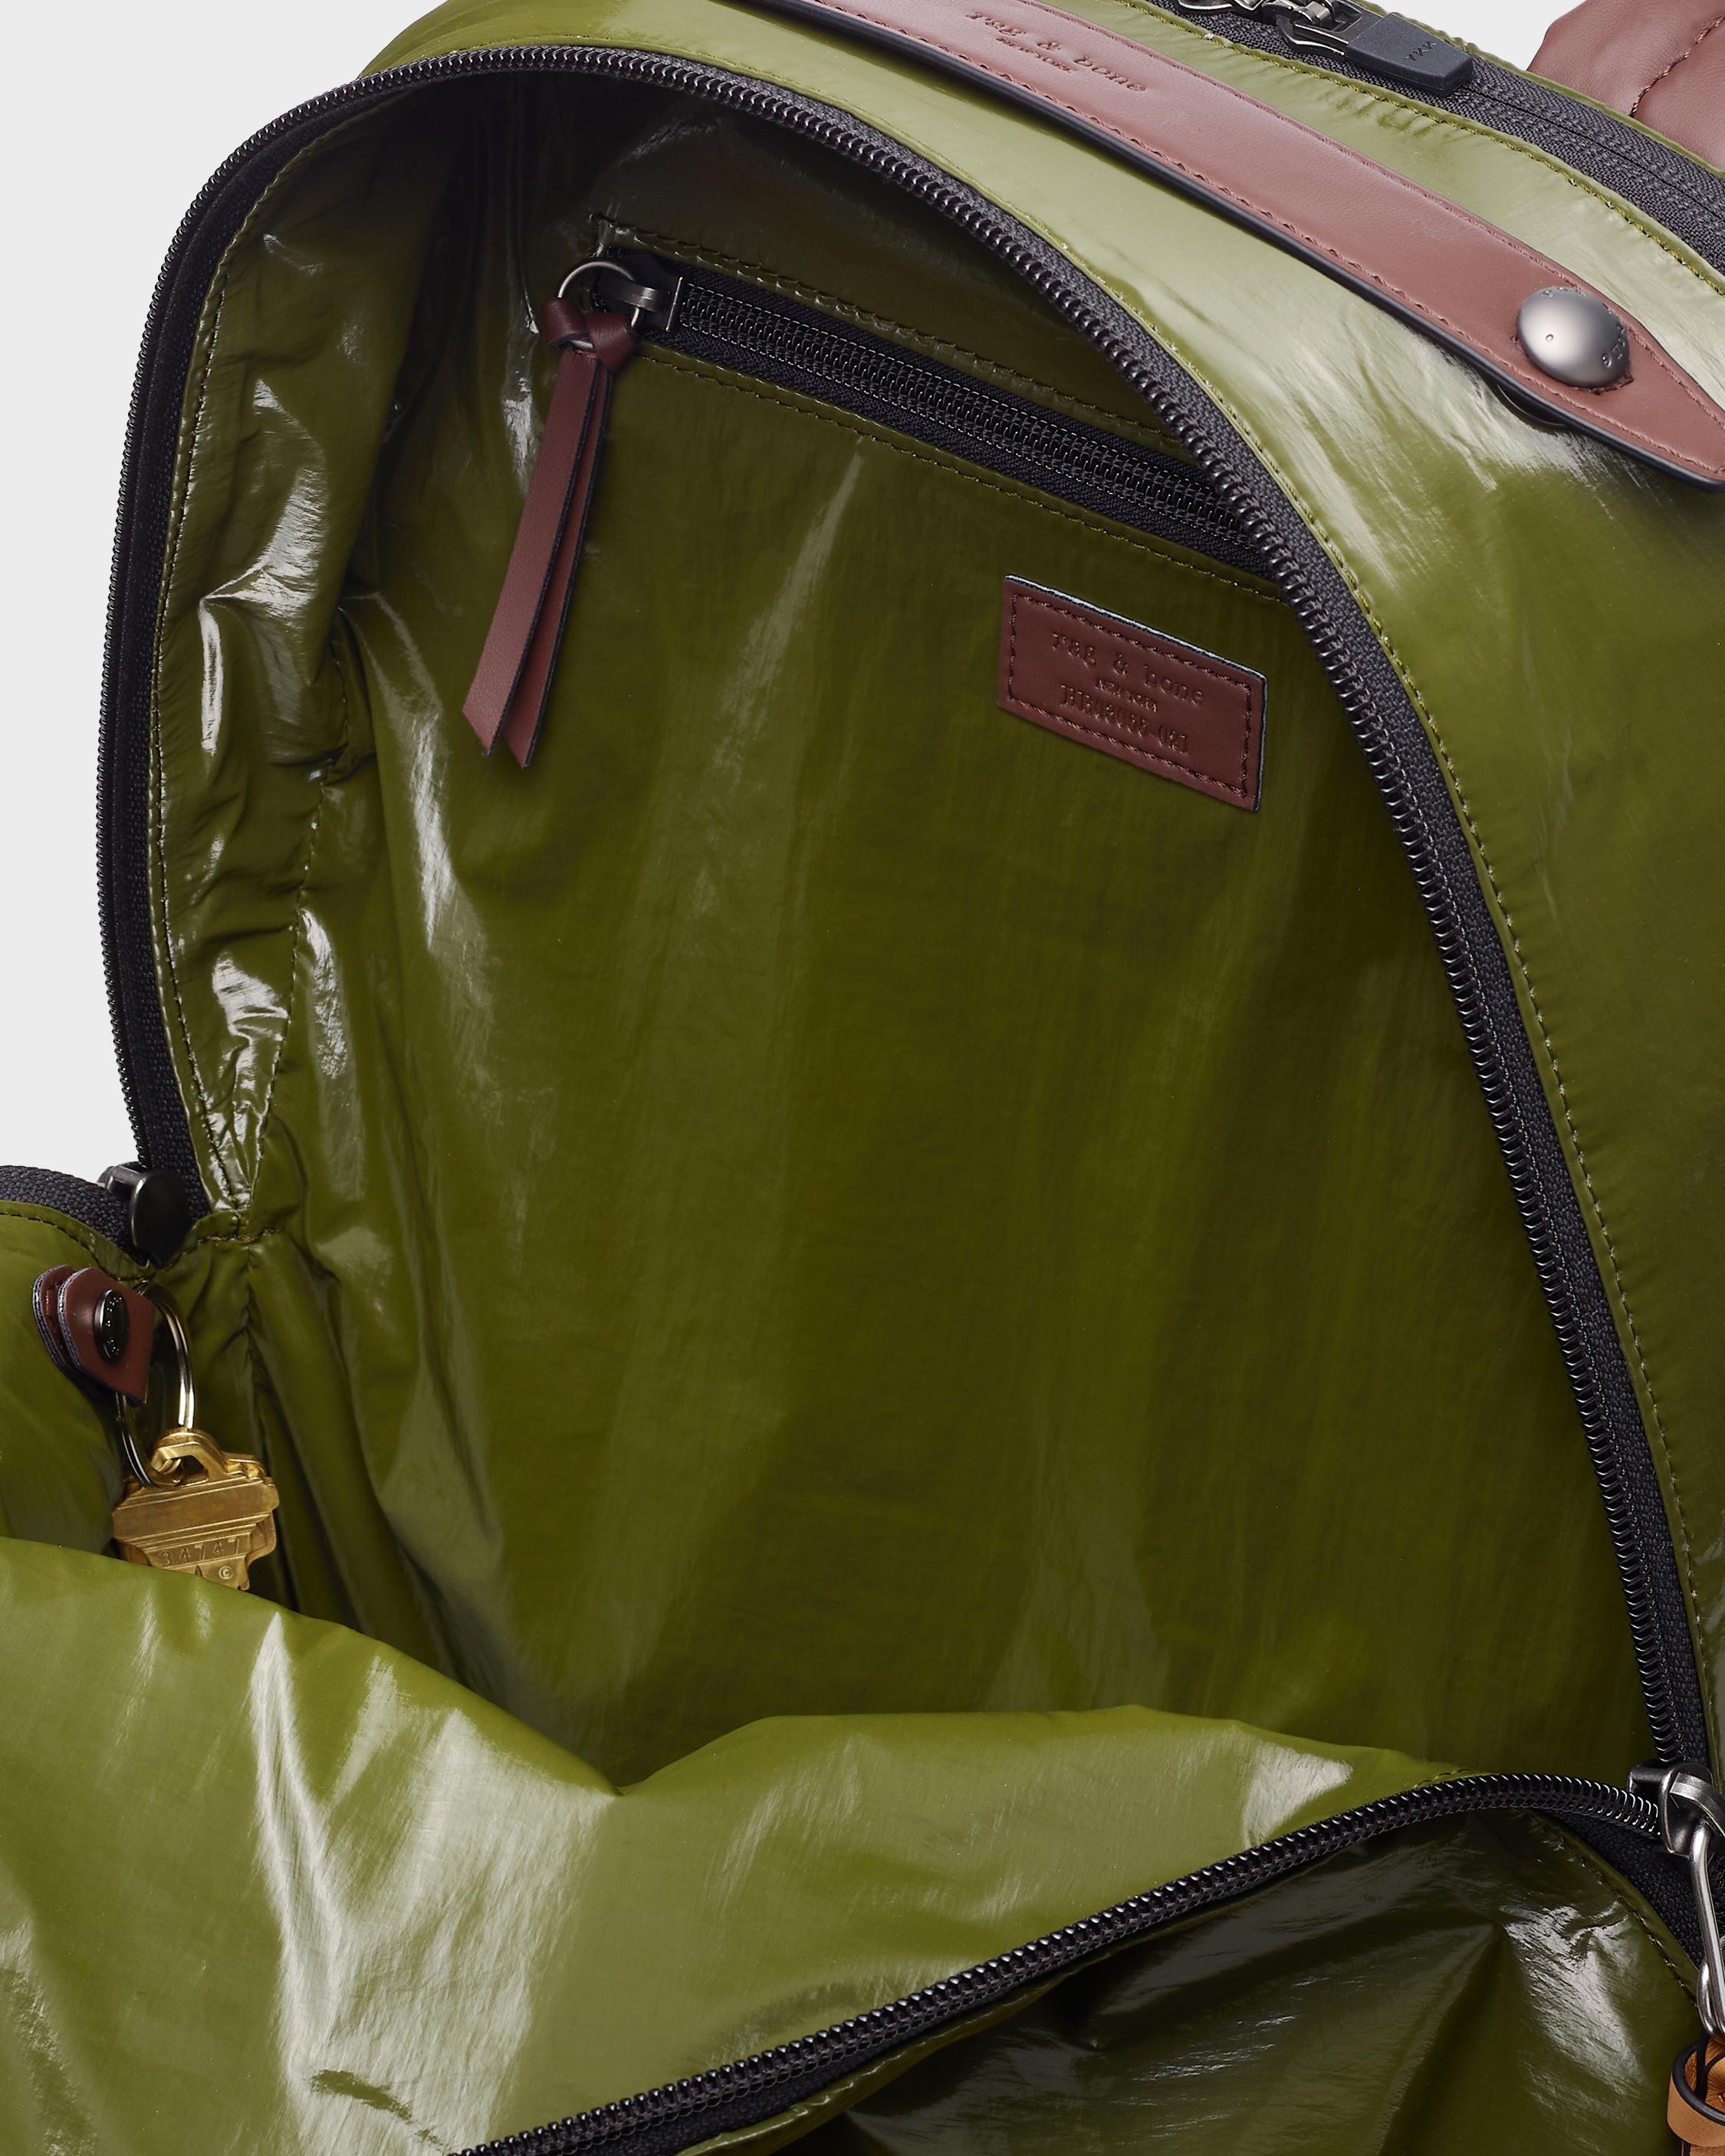 Commuter Backpack - Eco Nylon
Large Backpack - 5